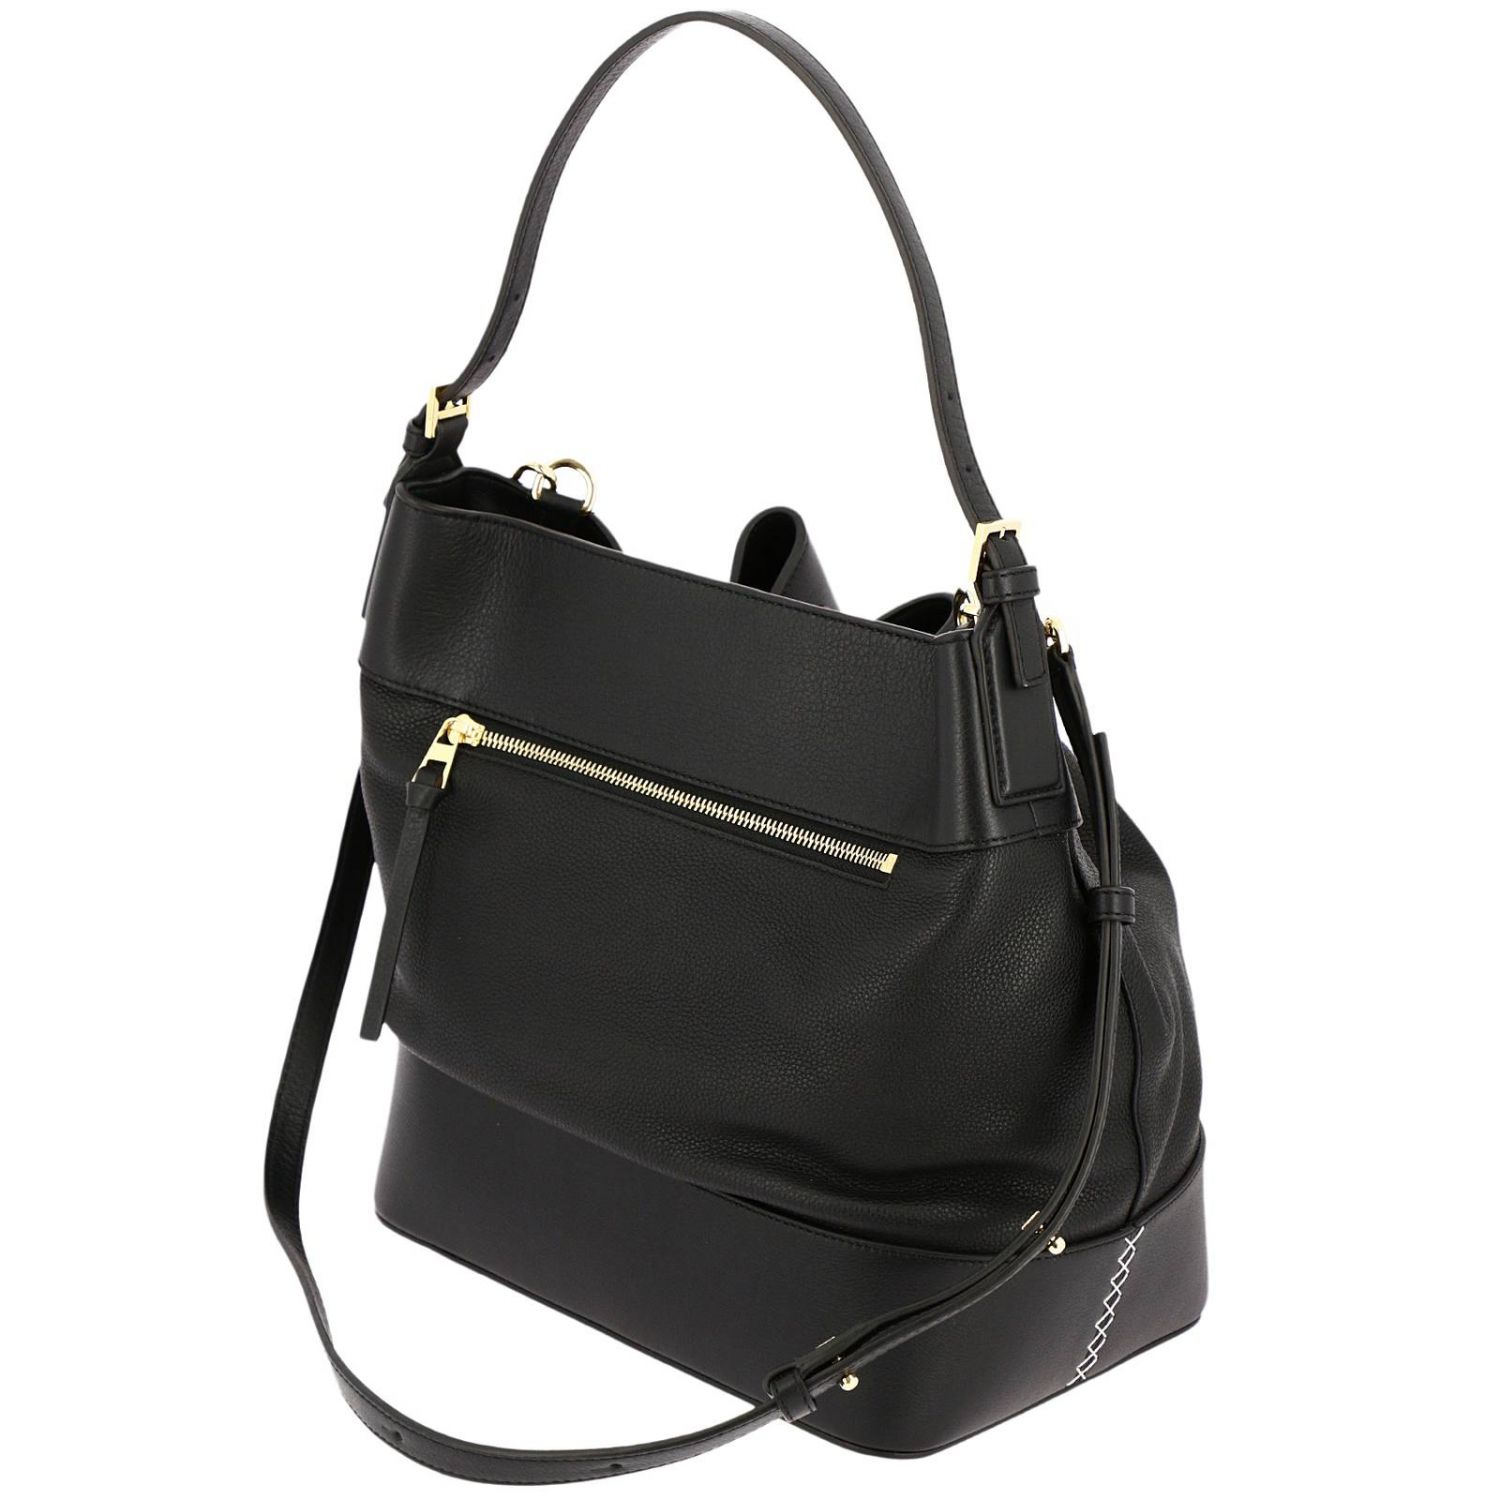 Shoulder bag women Loewe | Shoulder Bag Loewe Women Black | Shoulder ...